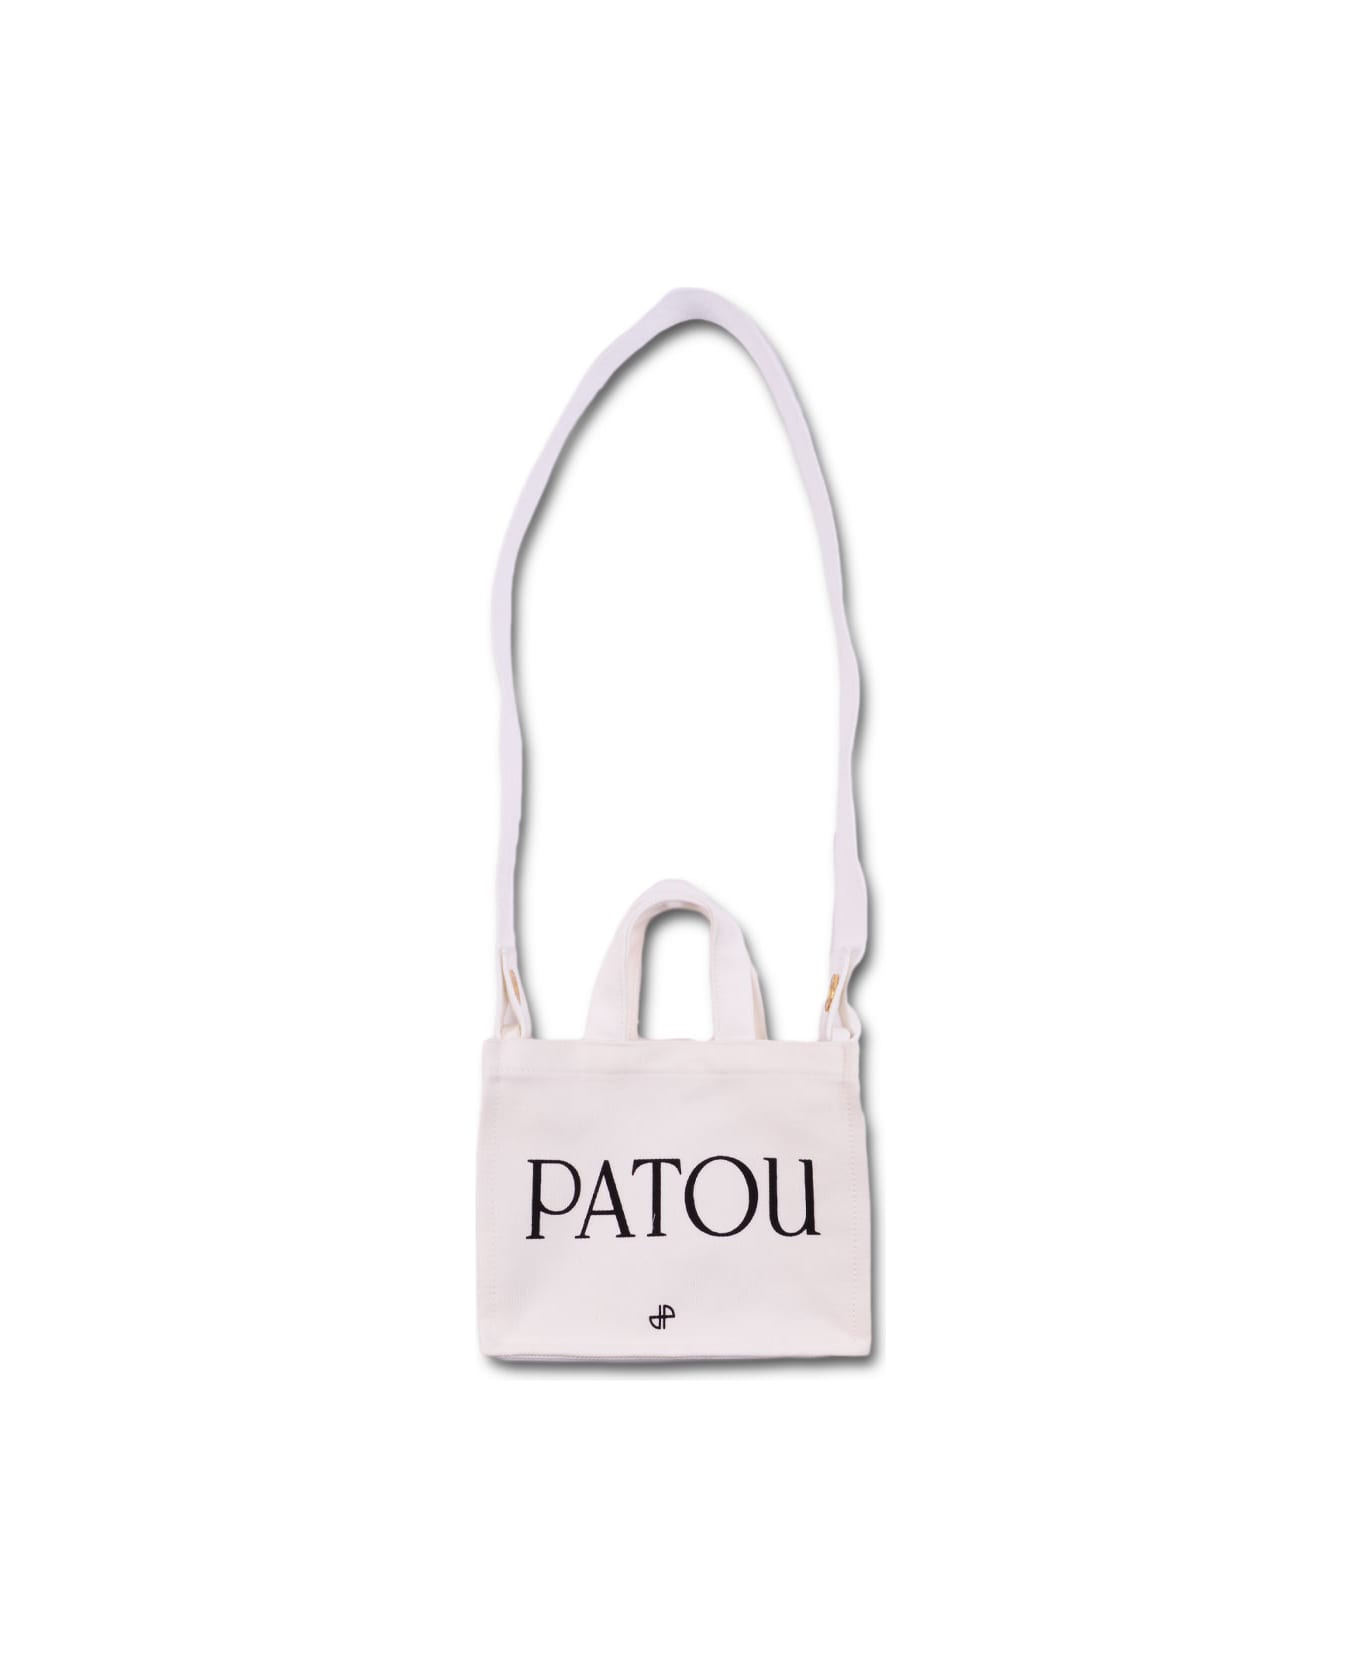 Patou Small Patou Tote Bag - White